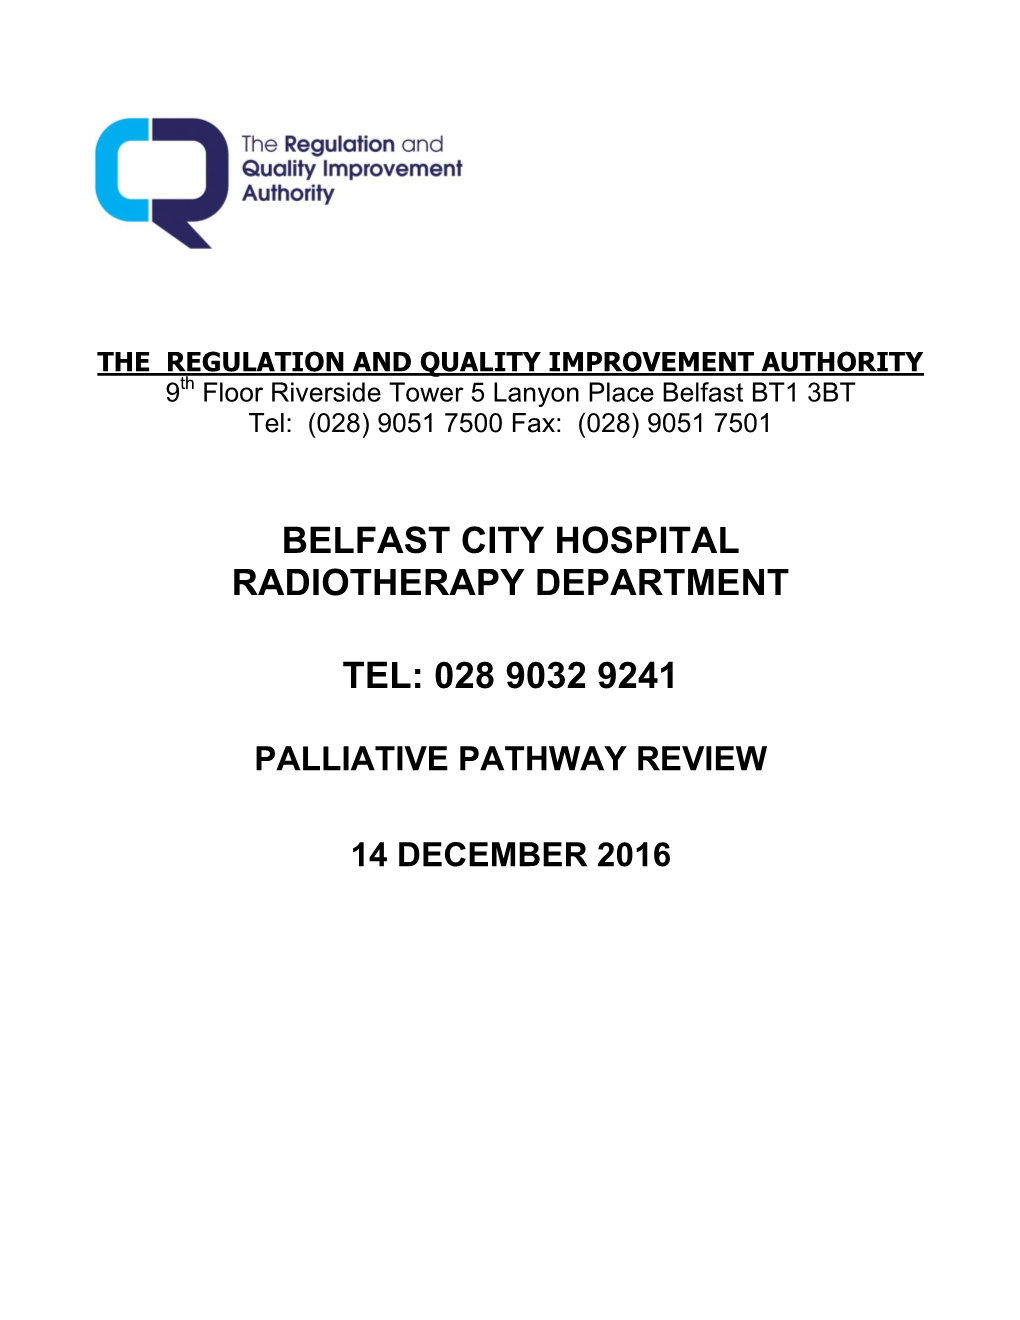 Belfast City Hospital Radiotherapy Department